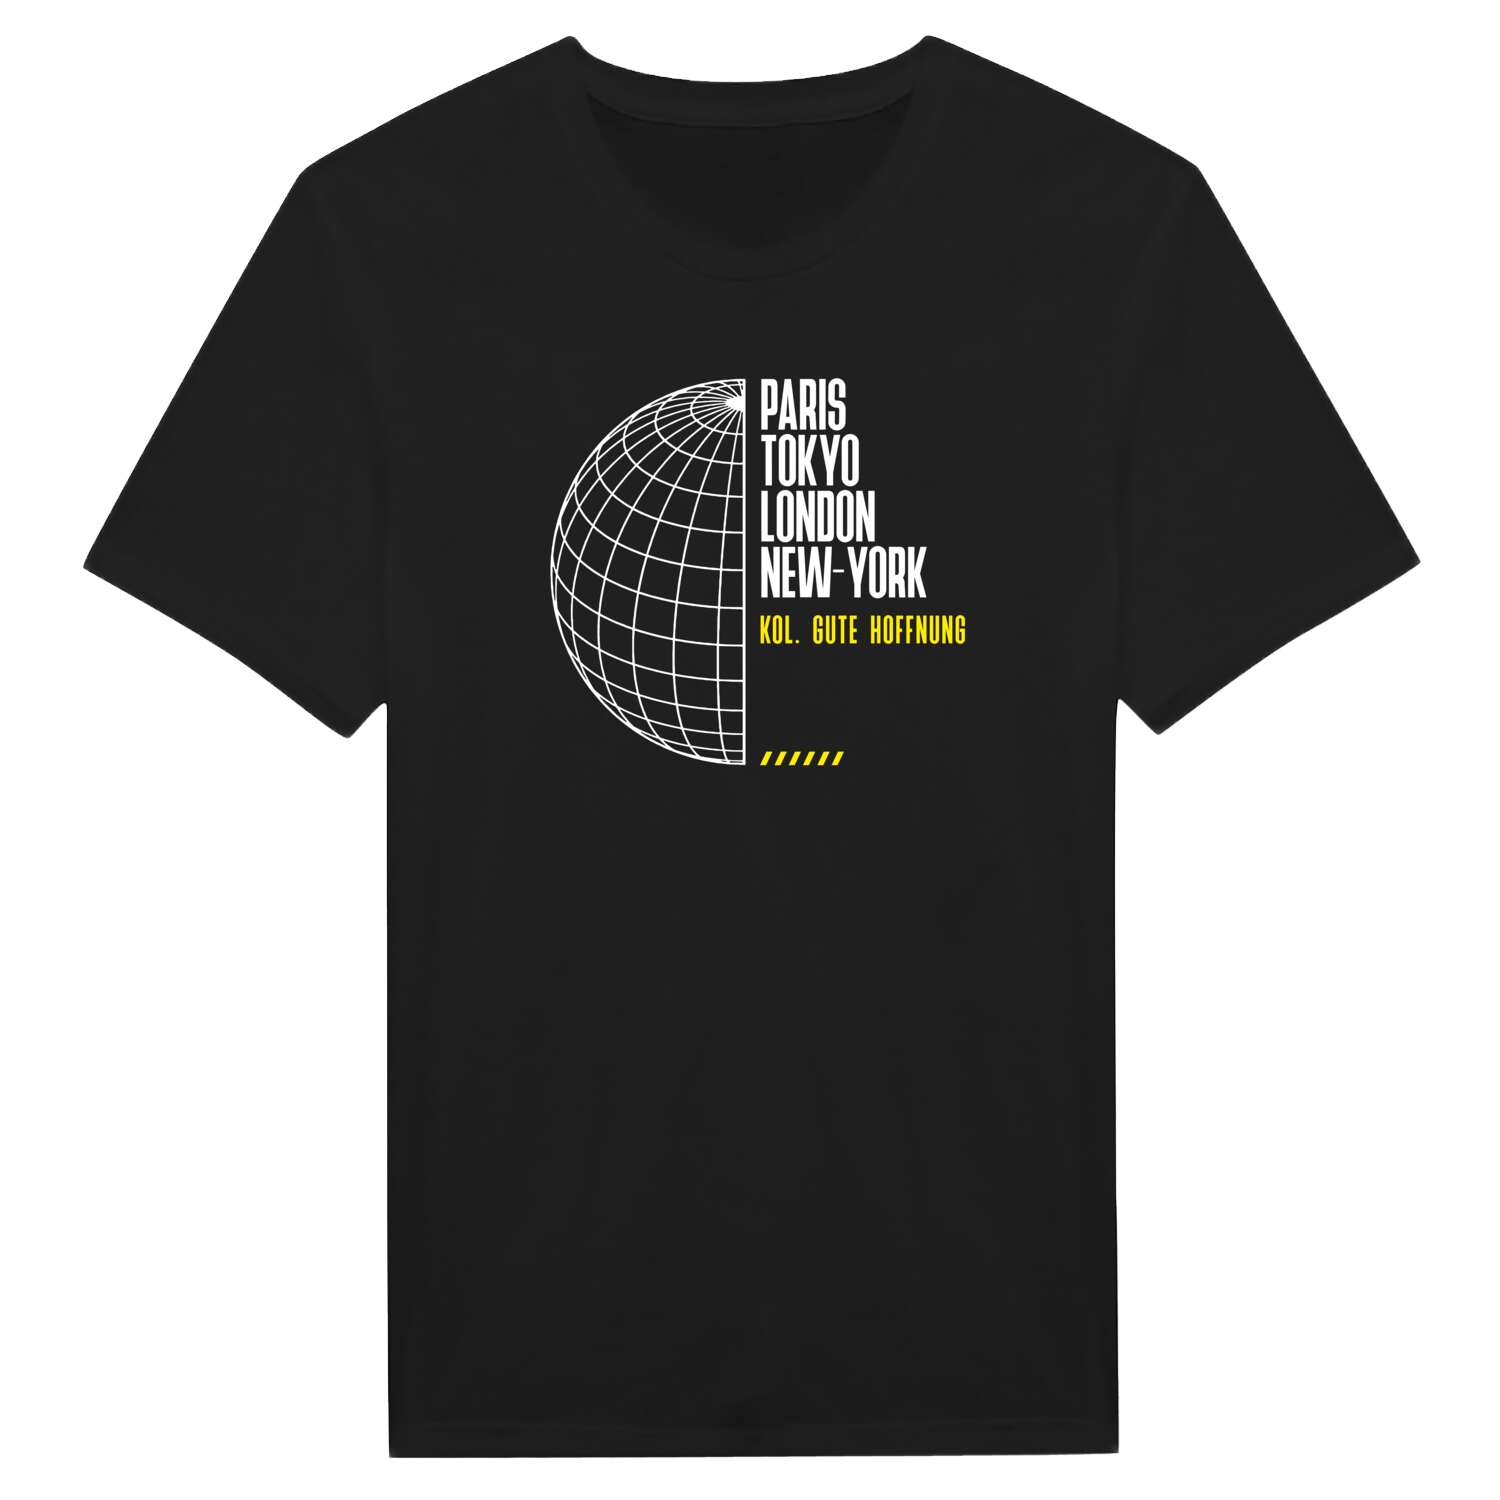 Kol. Gute Hoffnung T-Shirt »Paris Tokyo London«